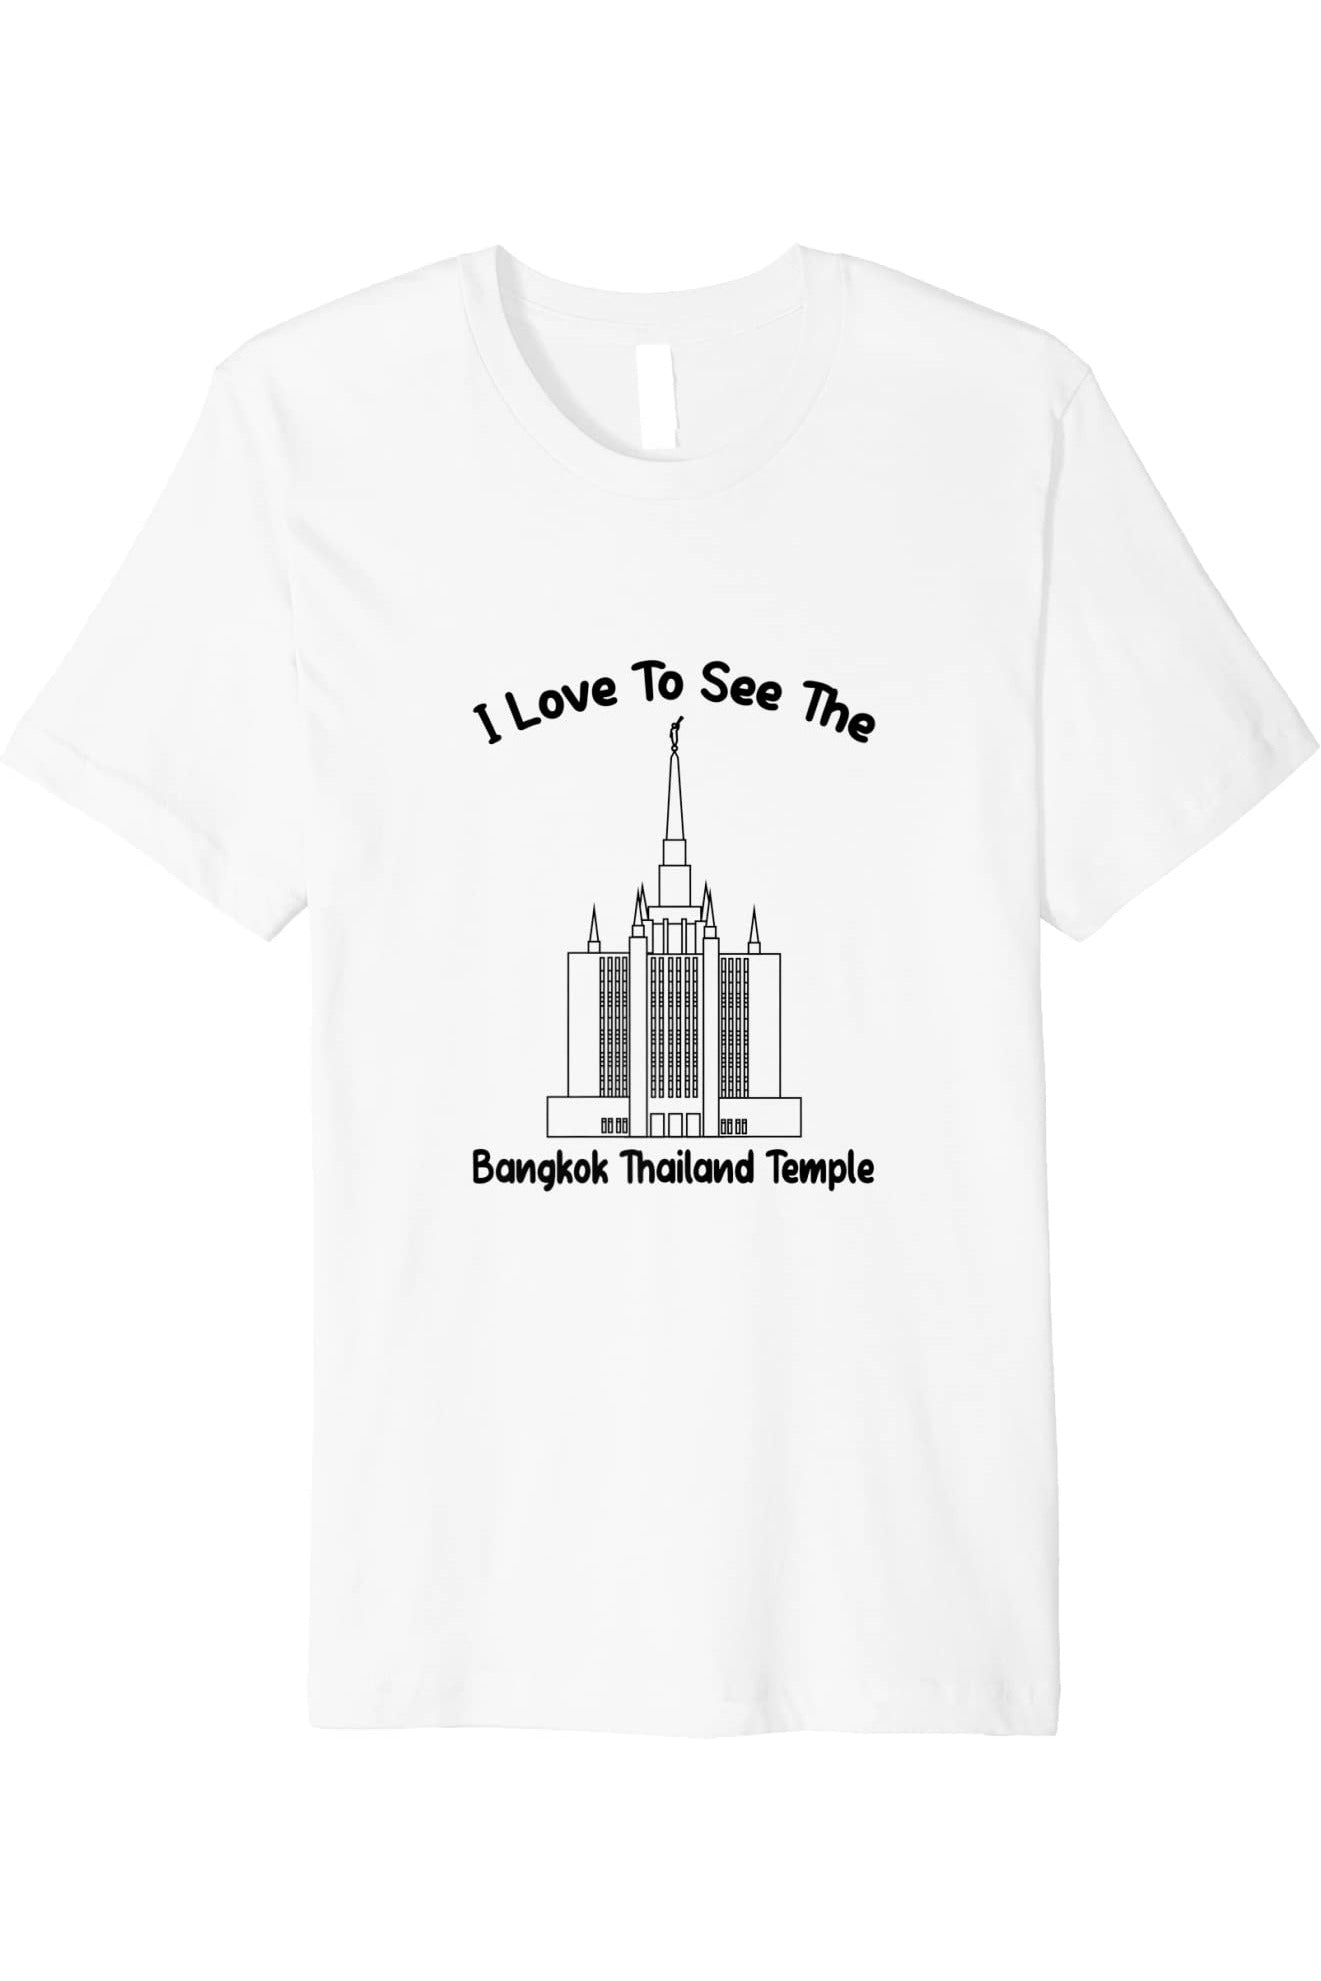 Bangkok Thailand Temple T-Shirt - Premium - Primary Style (English) US